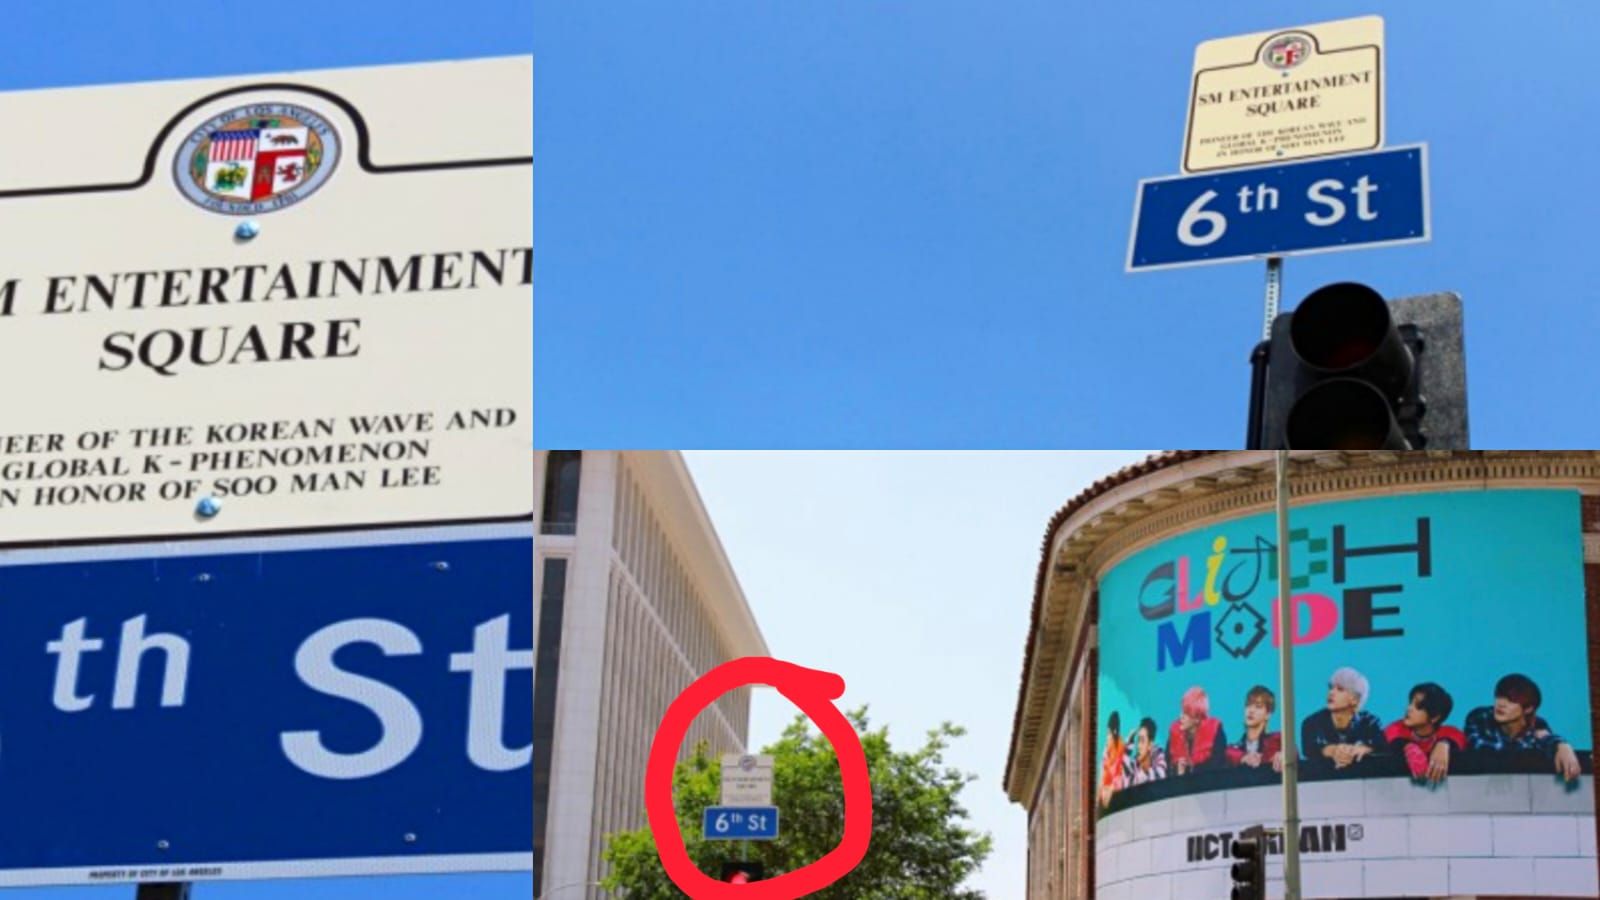 Papan tanda SM Entertainment Square Dipasang di Los Angeles, Rayakan Sindrom Kpop Global oleh Lee Soo Man